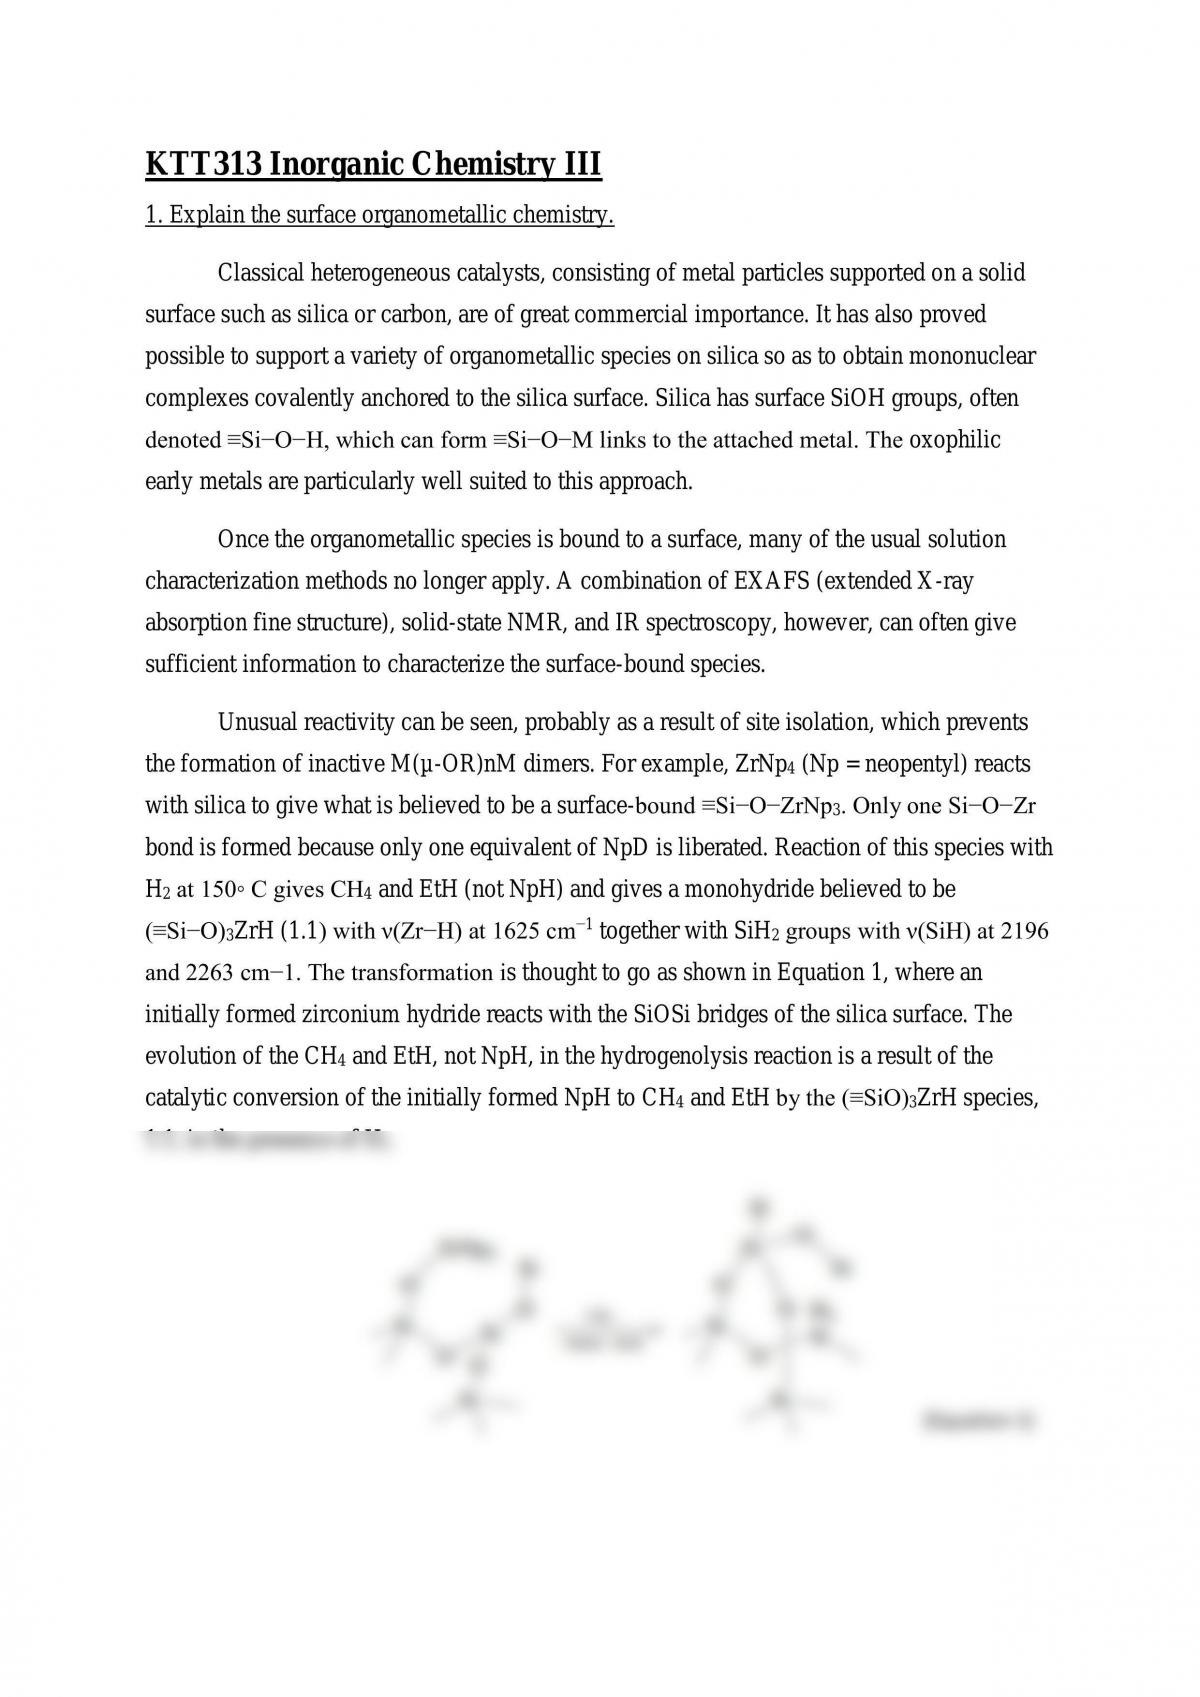 chemistry essay examples